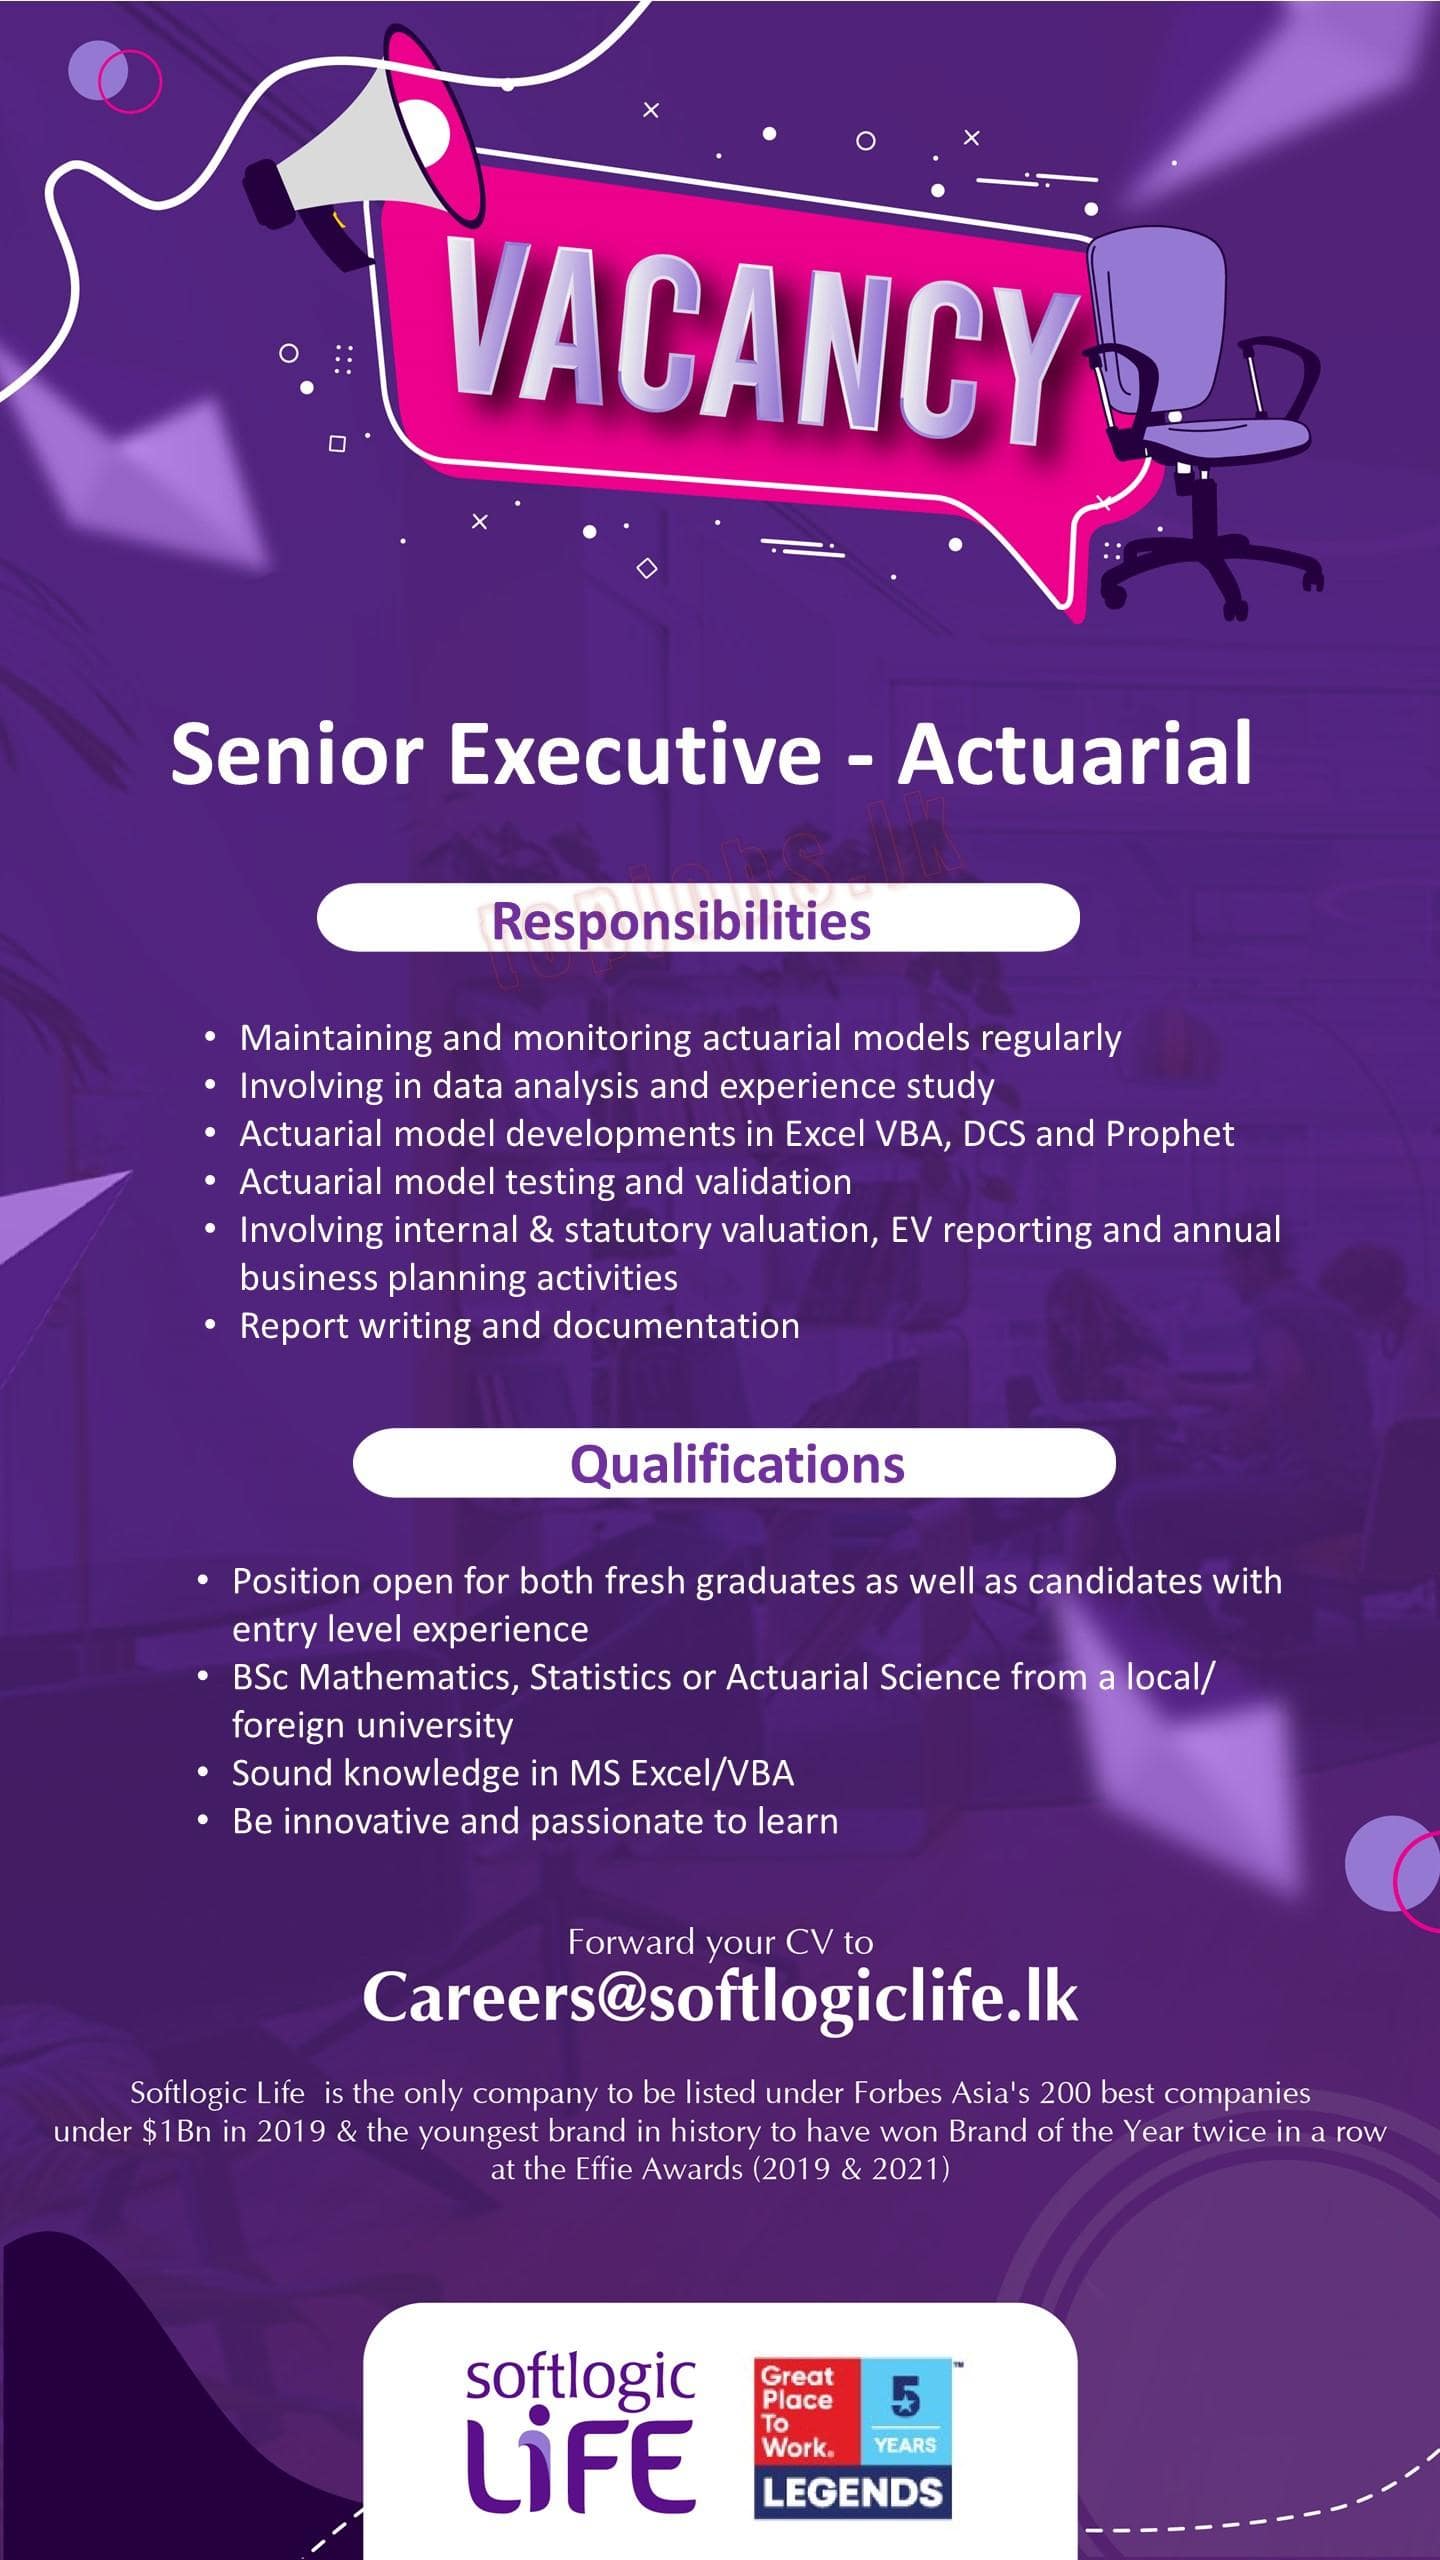 Senior Executive (Actuarial) Job Vacancy - Softlogic Life Insurance Jobs Vacancies